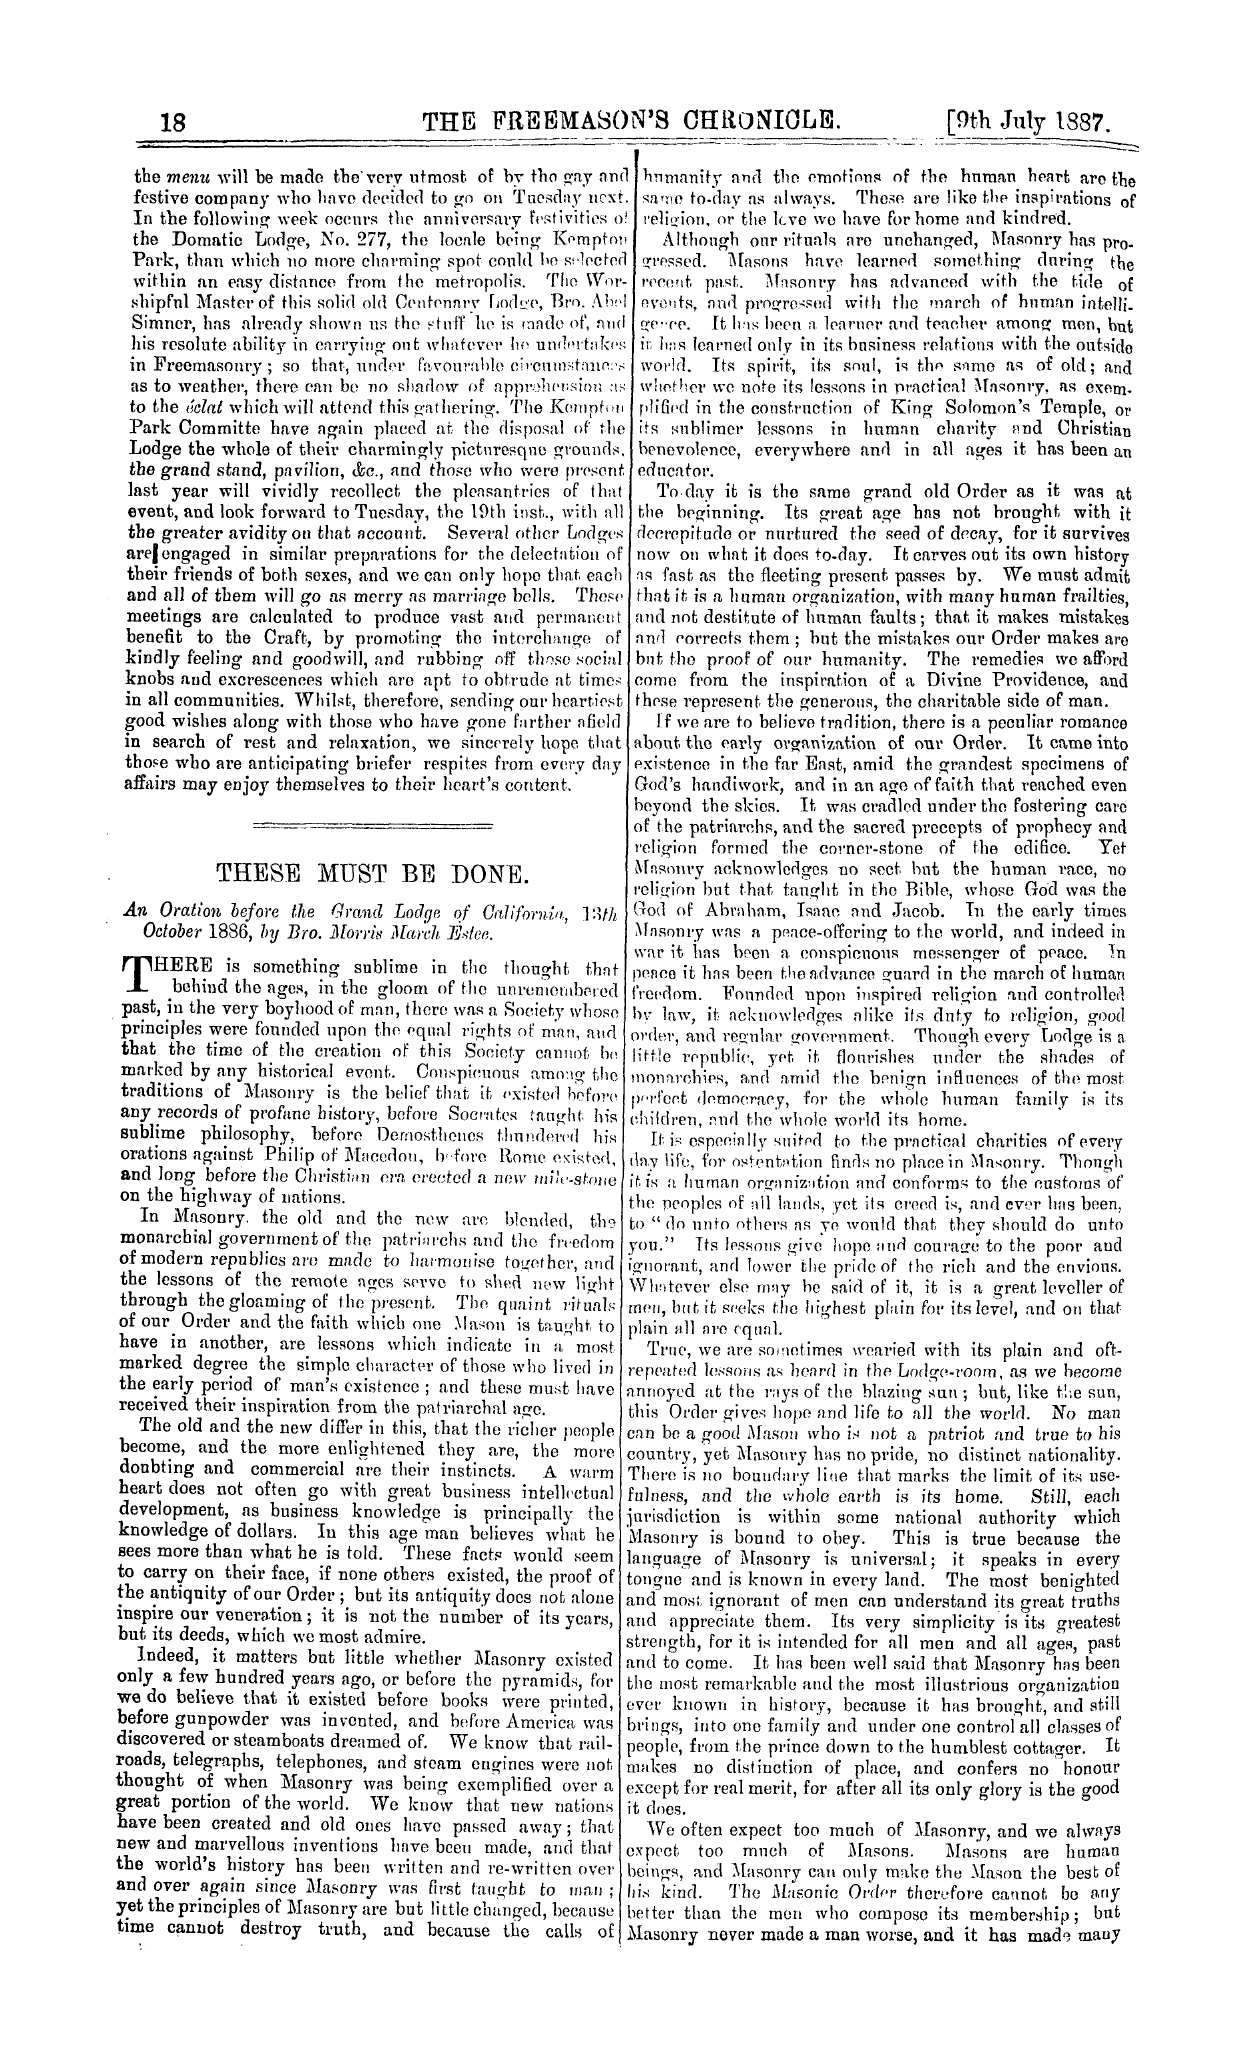 The Freemason's Chronicle: 1887-07-09 - Freemasonry And The Fair Sex.